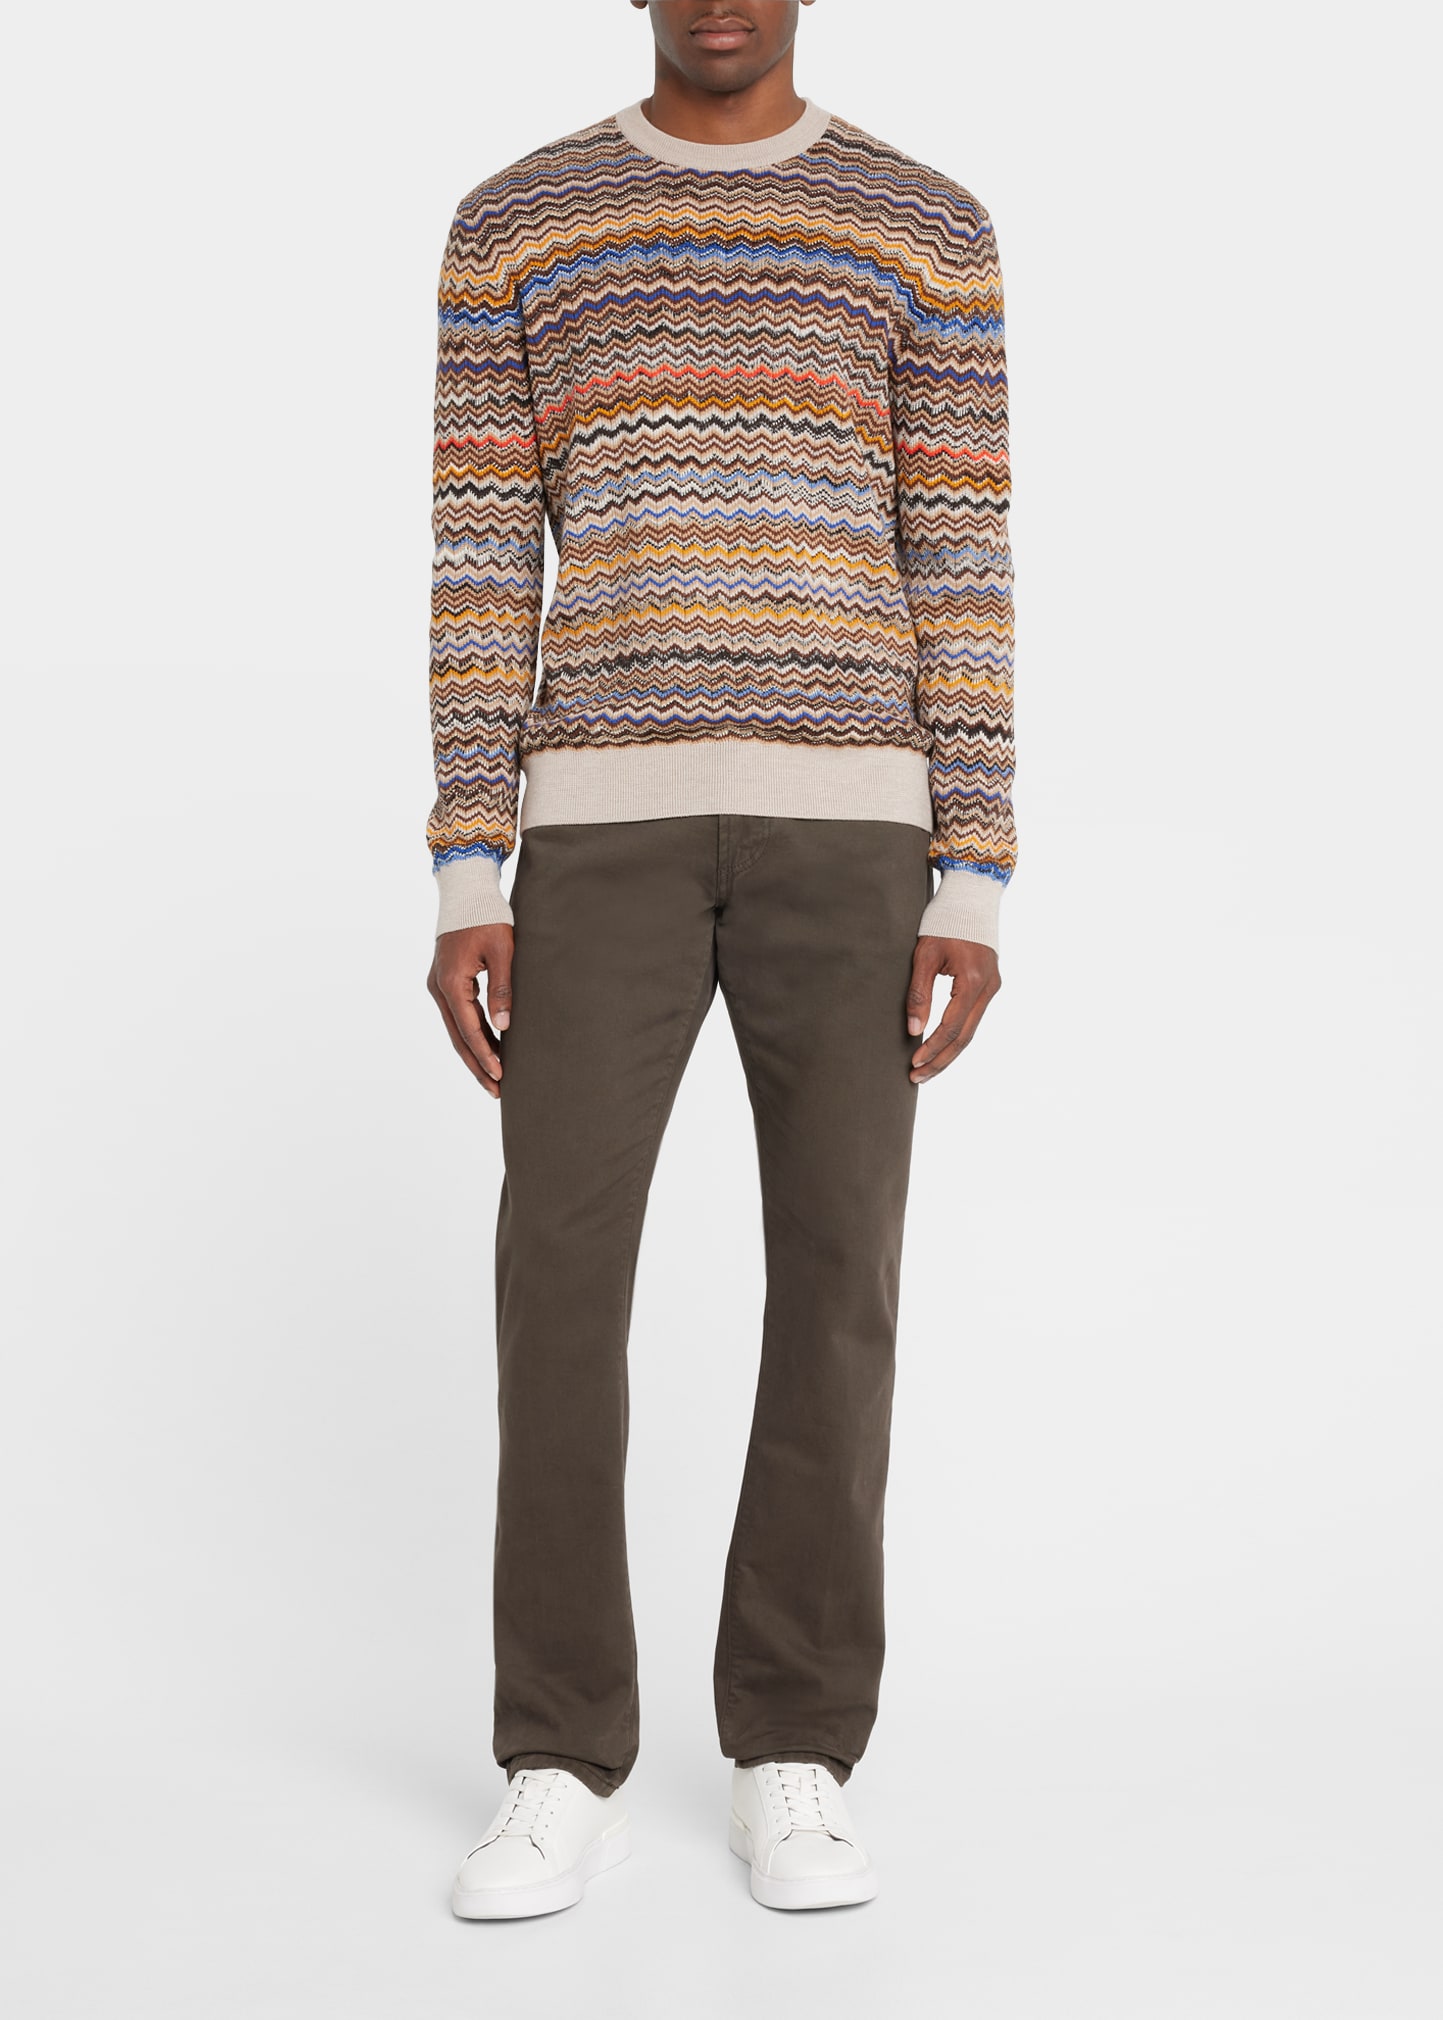 Men's Ribbed Multi-Chevron Sweater